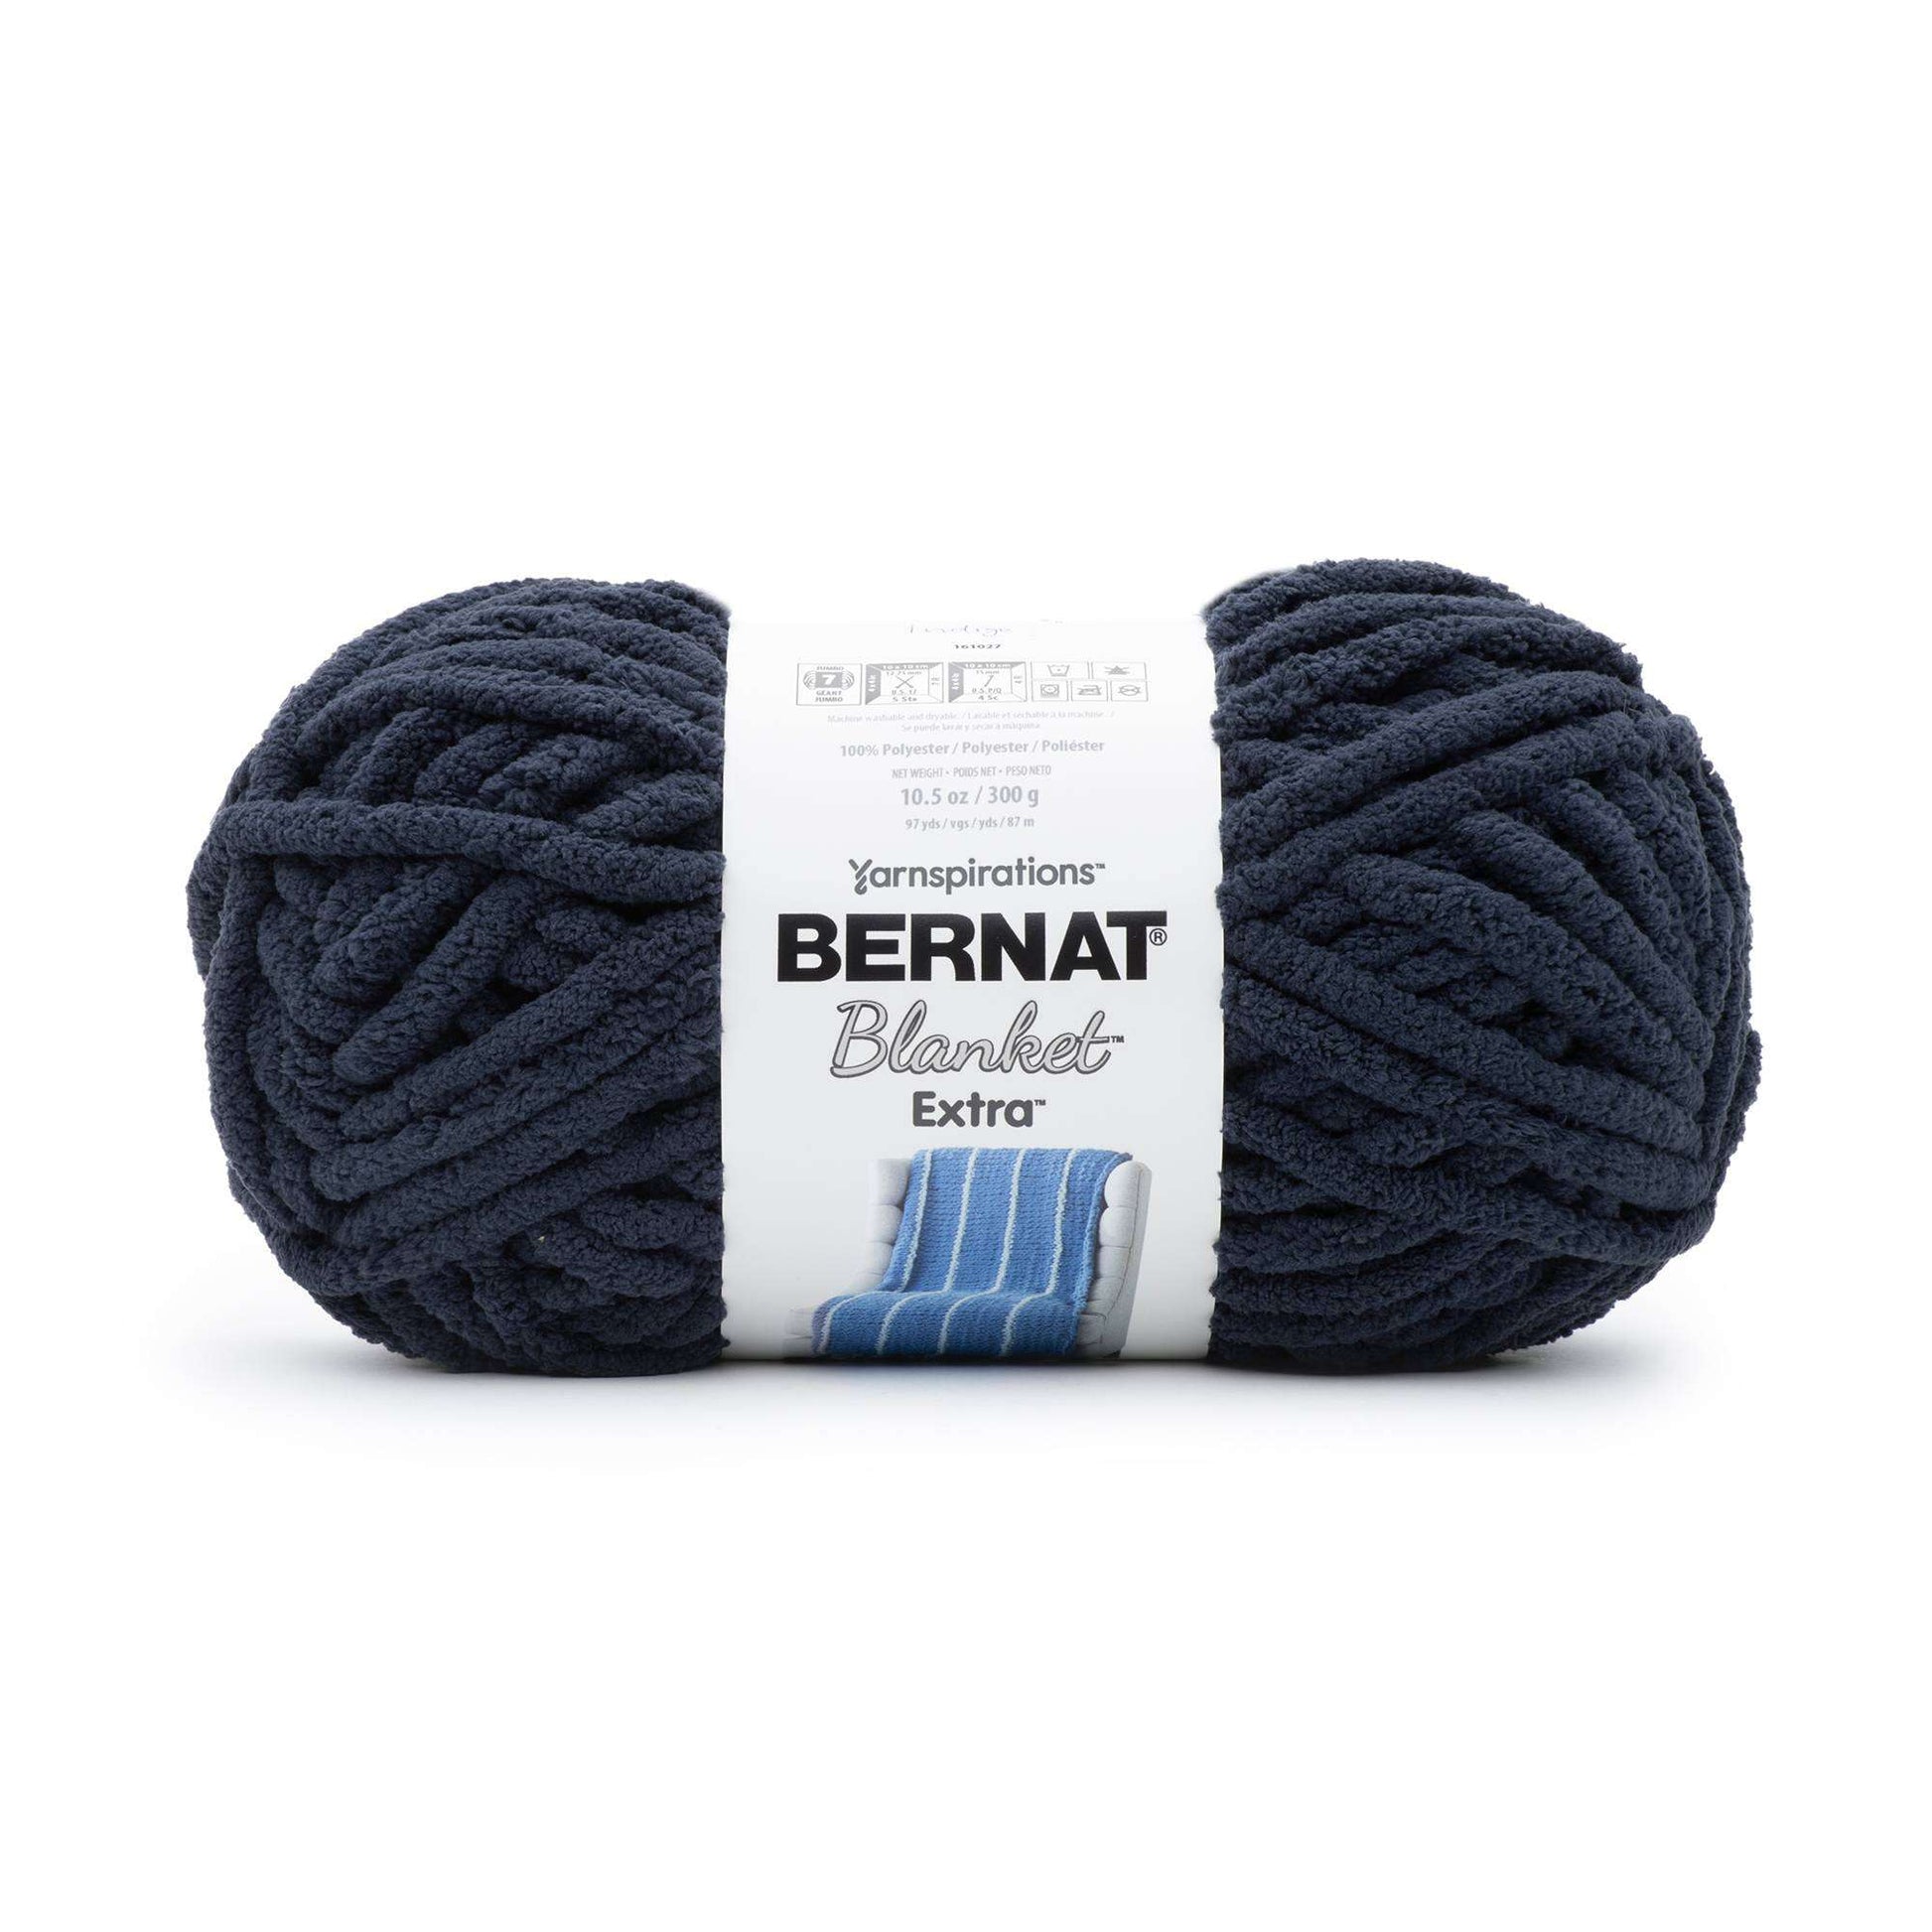 Bernat Blanket Extra Yarn (300g/10.5oz) Indigo